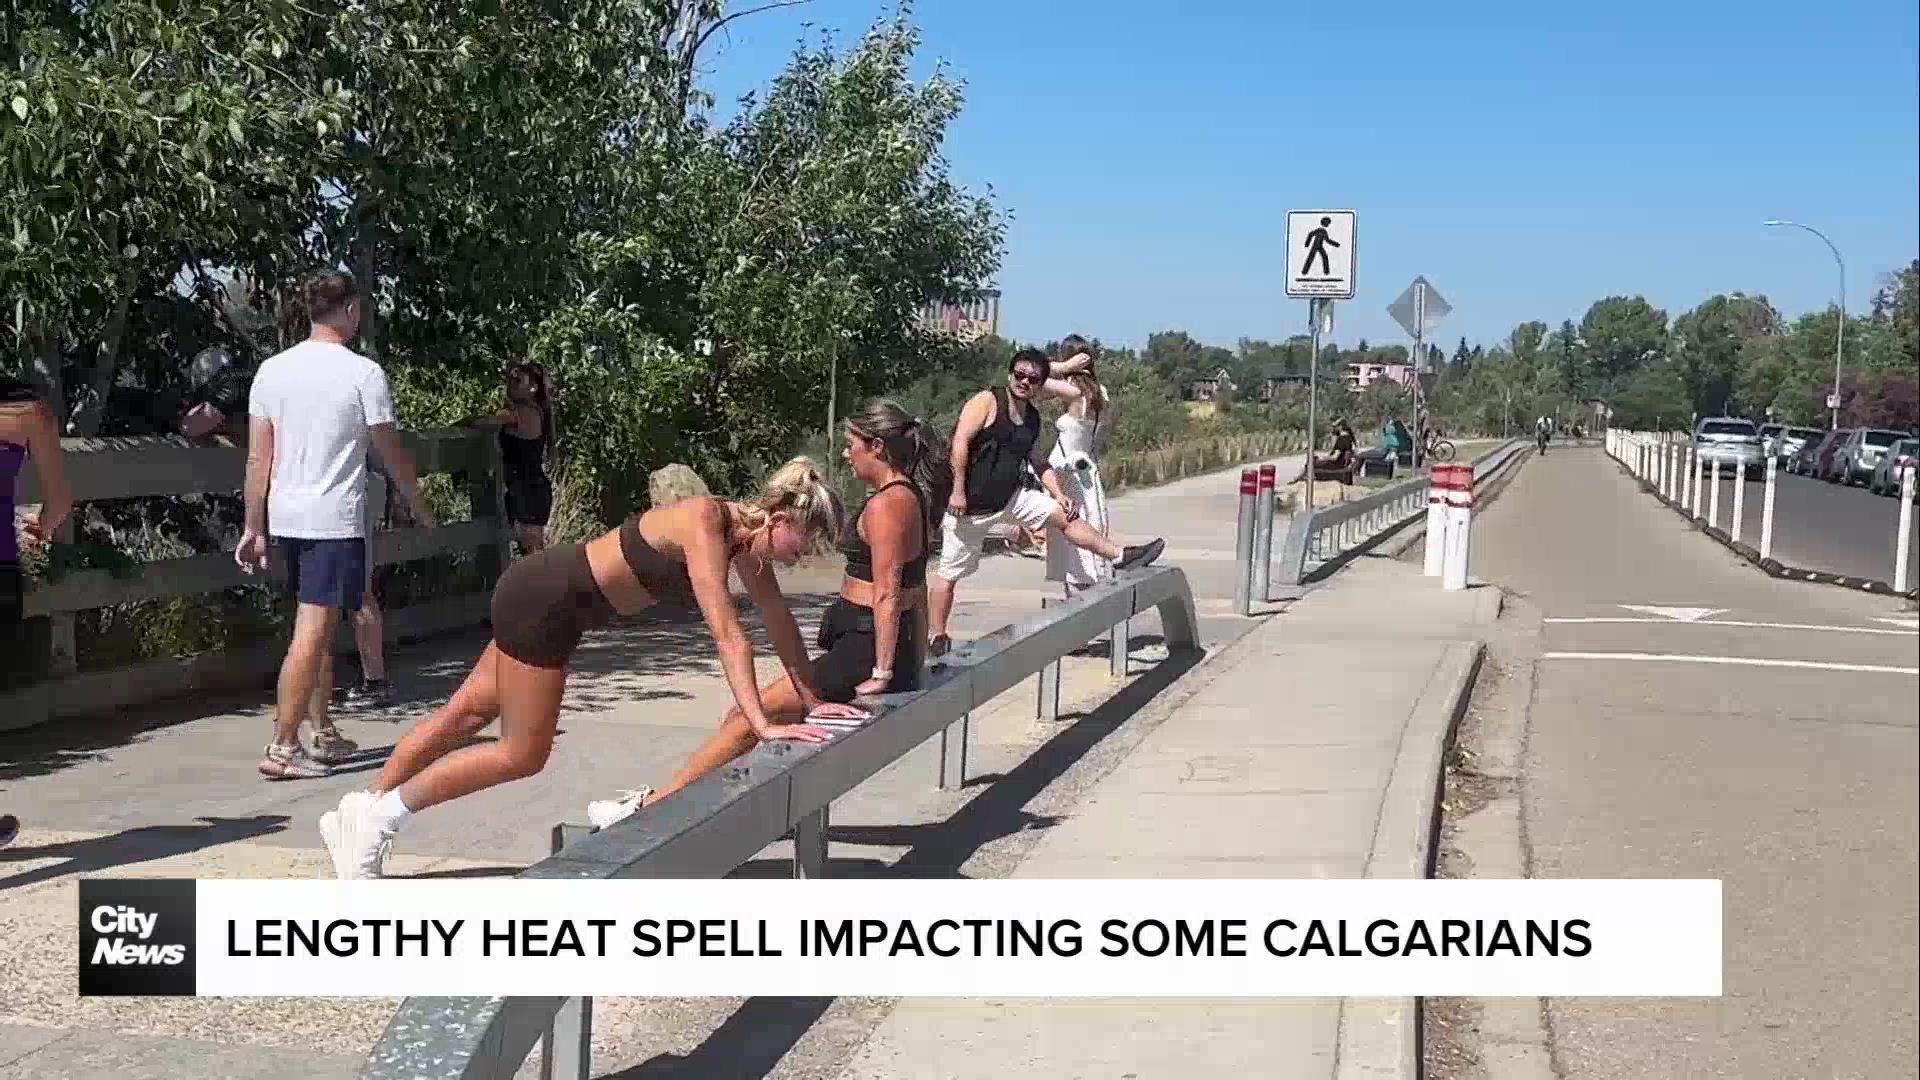 Lengthy heat spell impacting some Calgarians